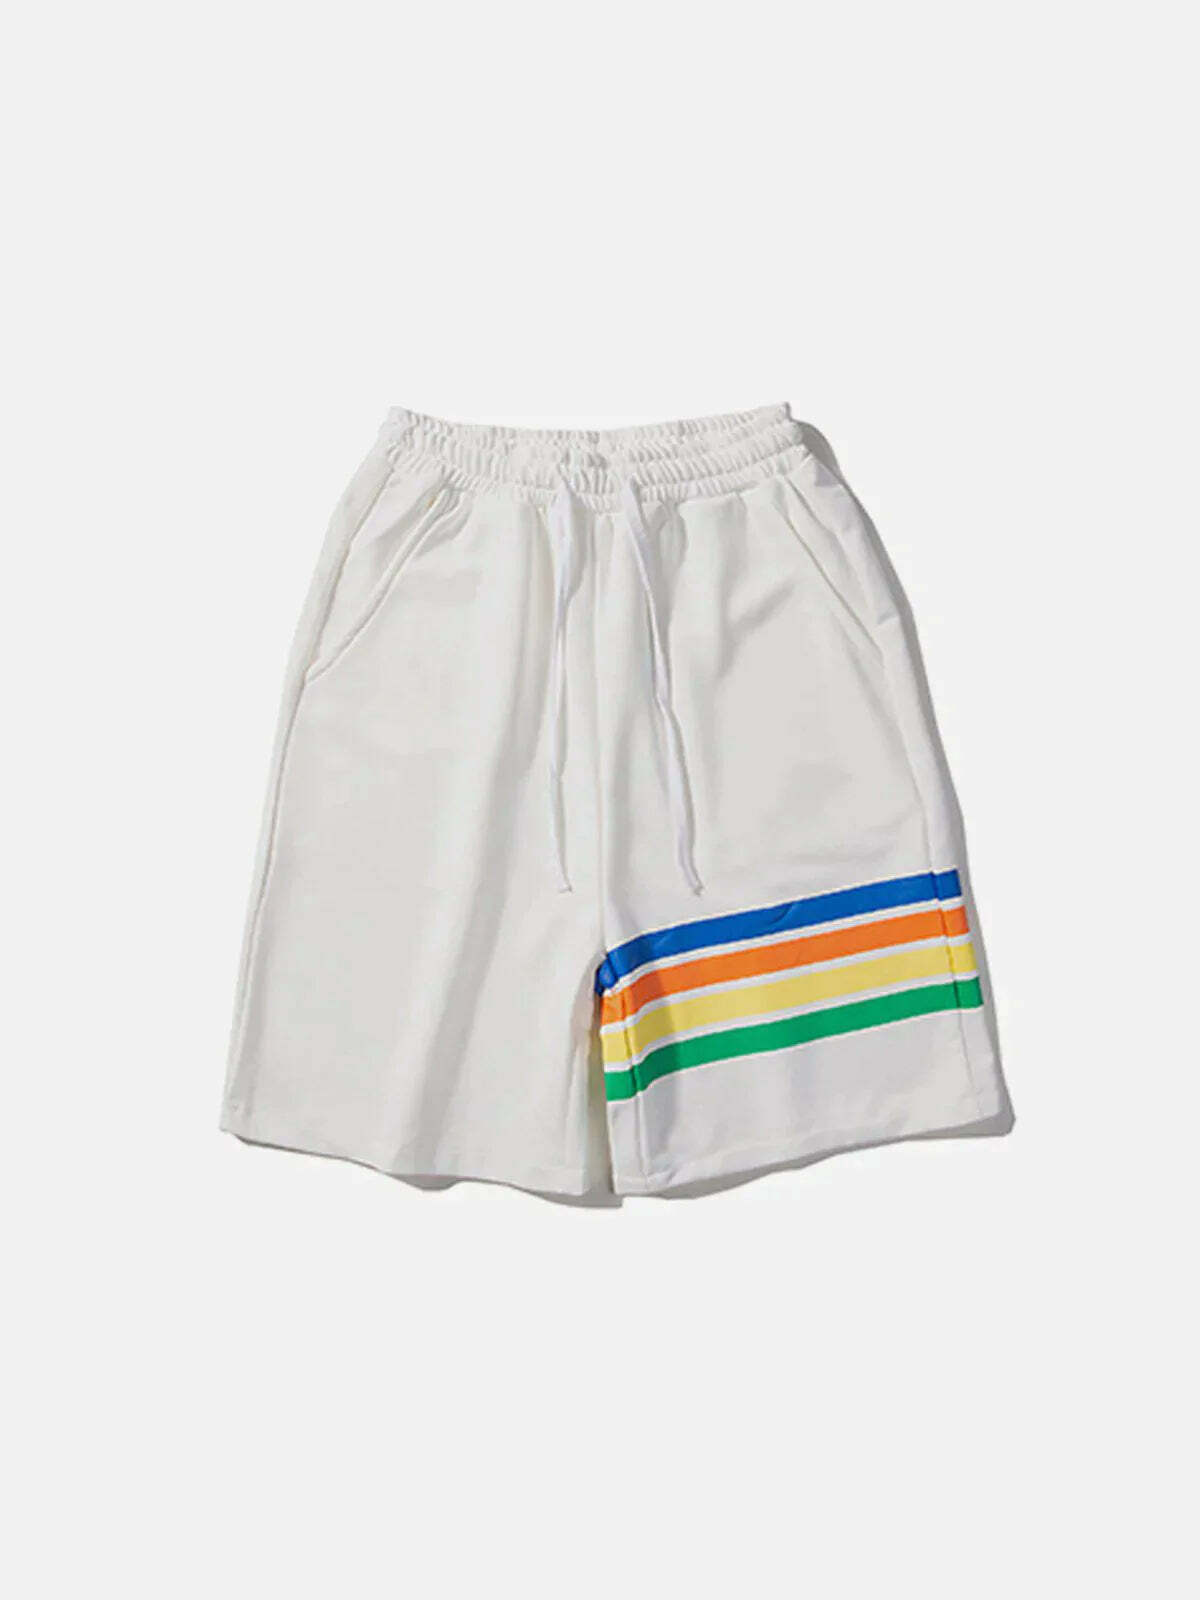 sleek striped drawstring shorts urban chic essential 8313